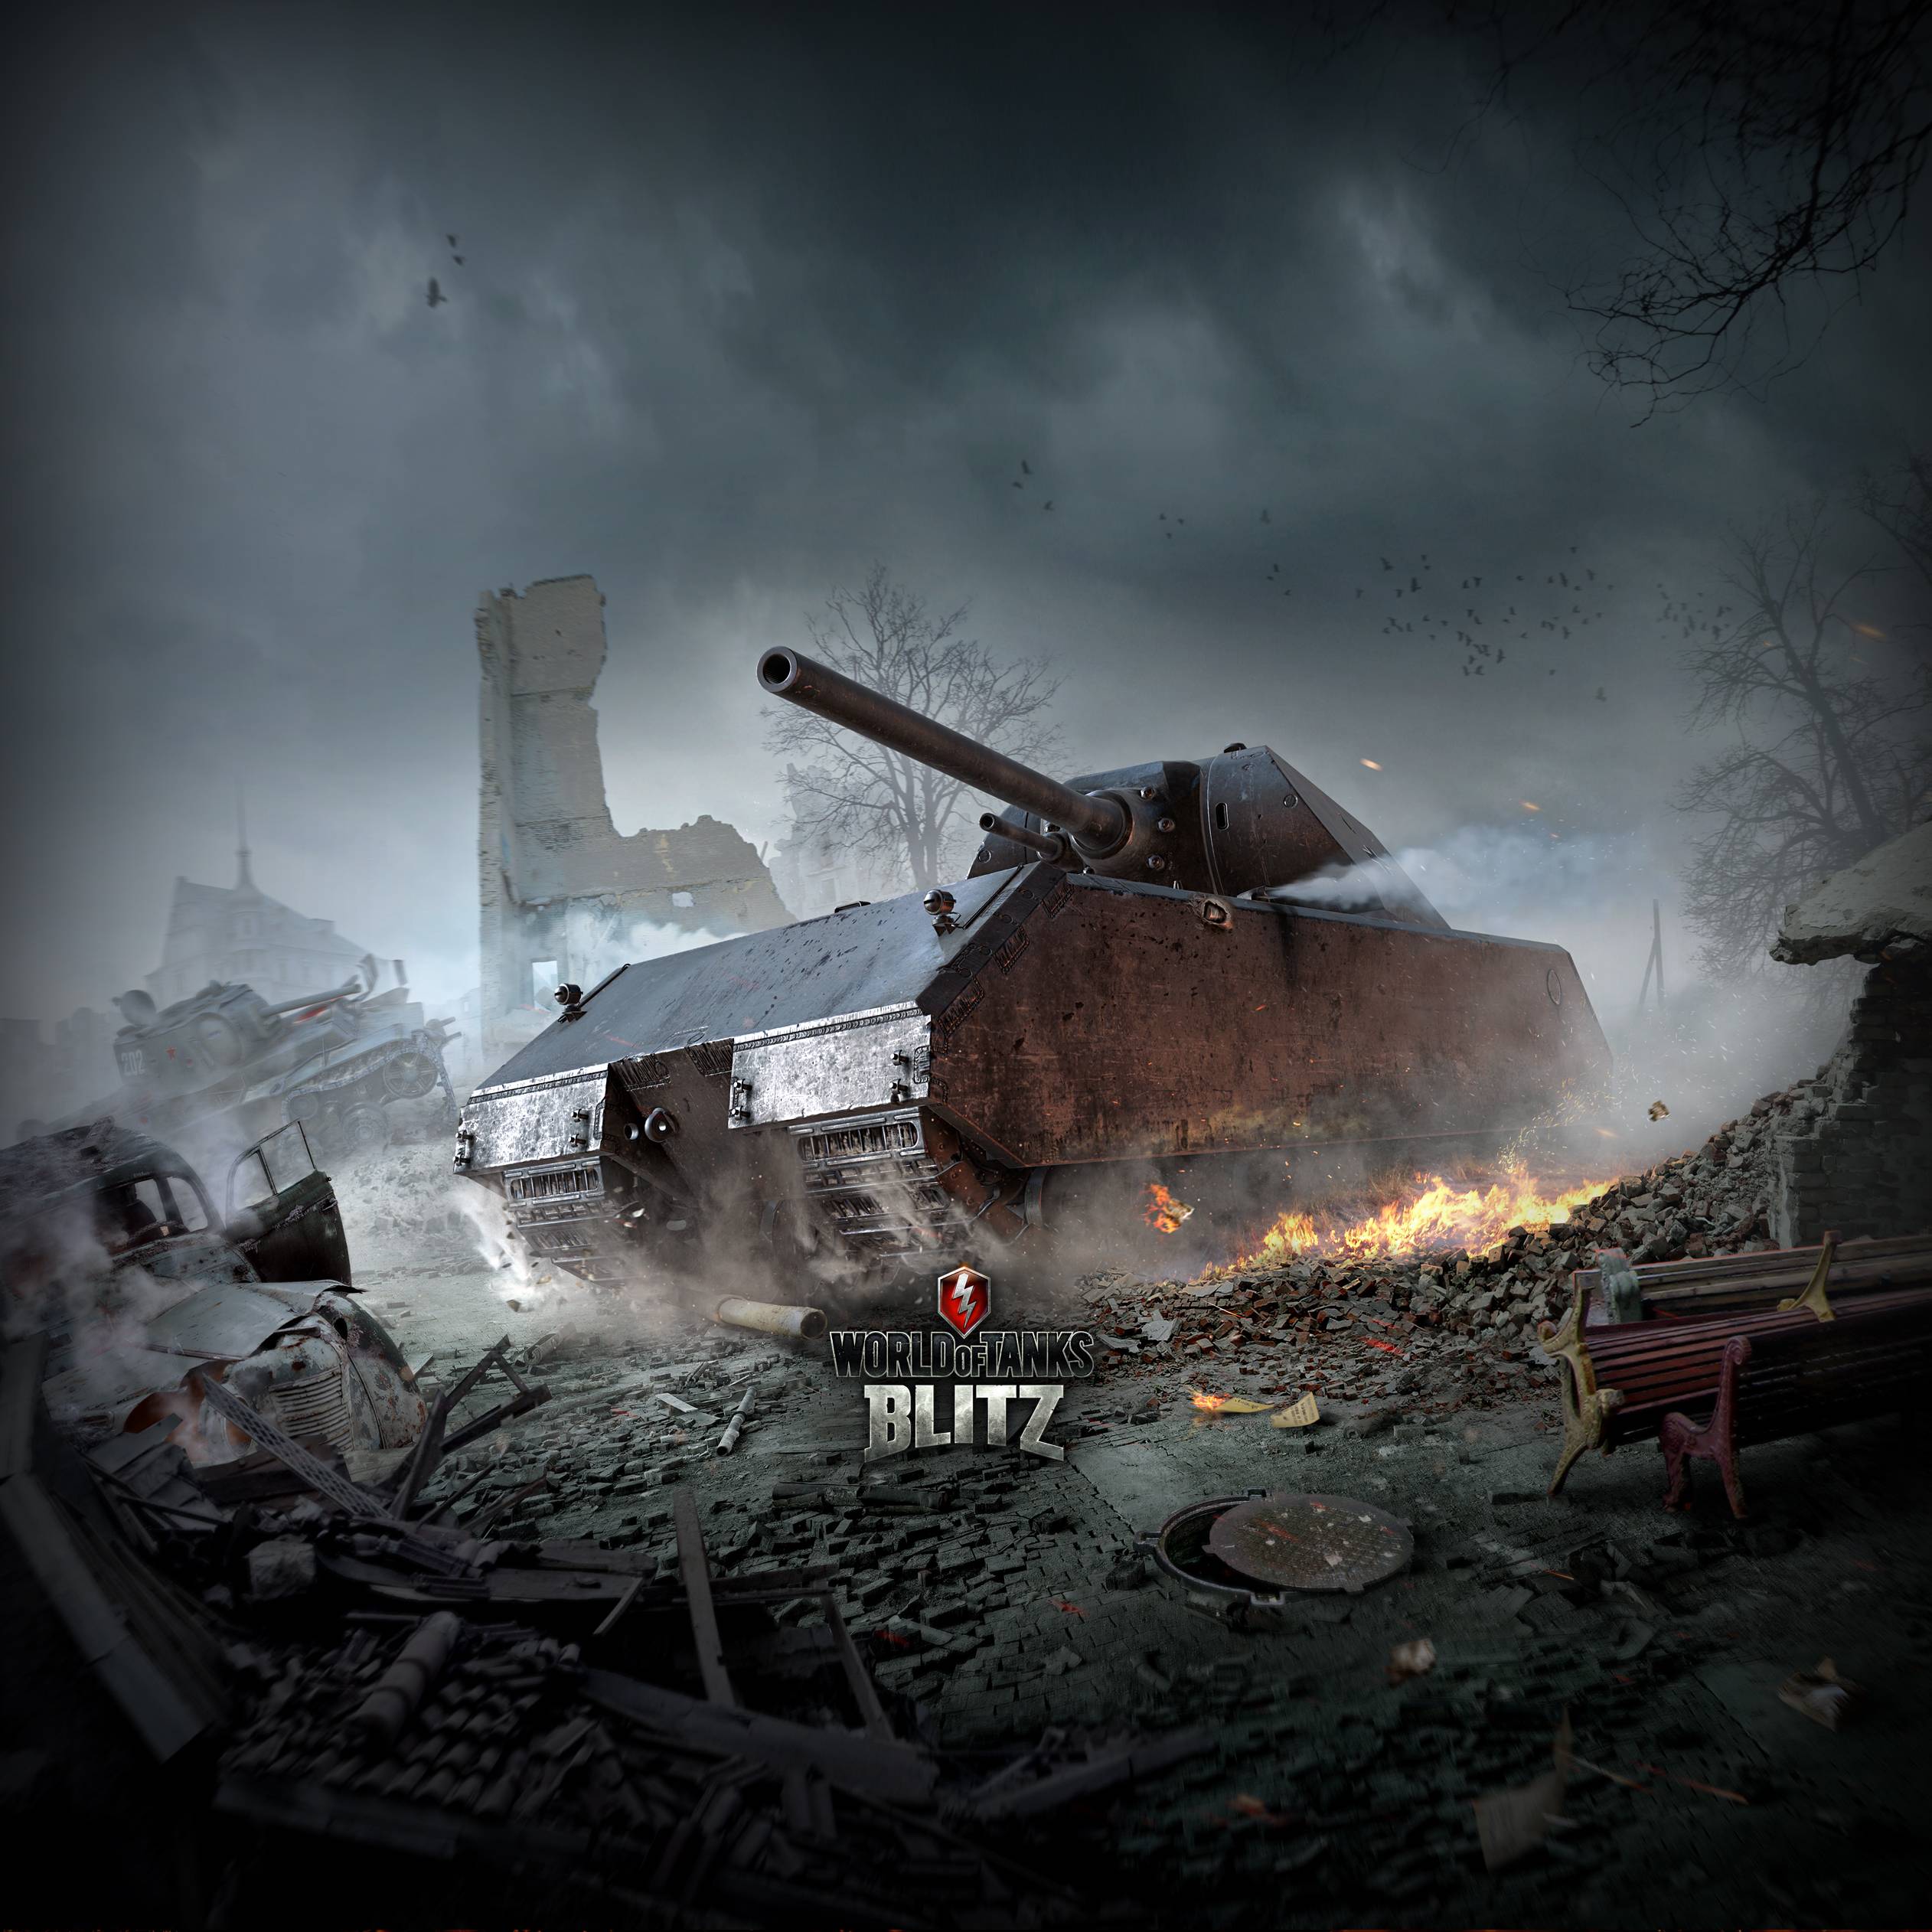 World Of Tanks Blitz Wallpaper Hd - WoodsLima